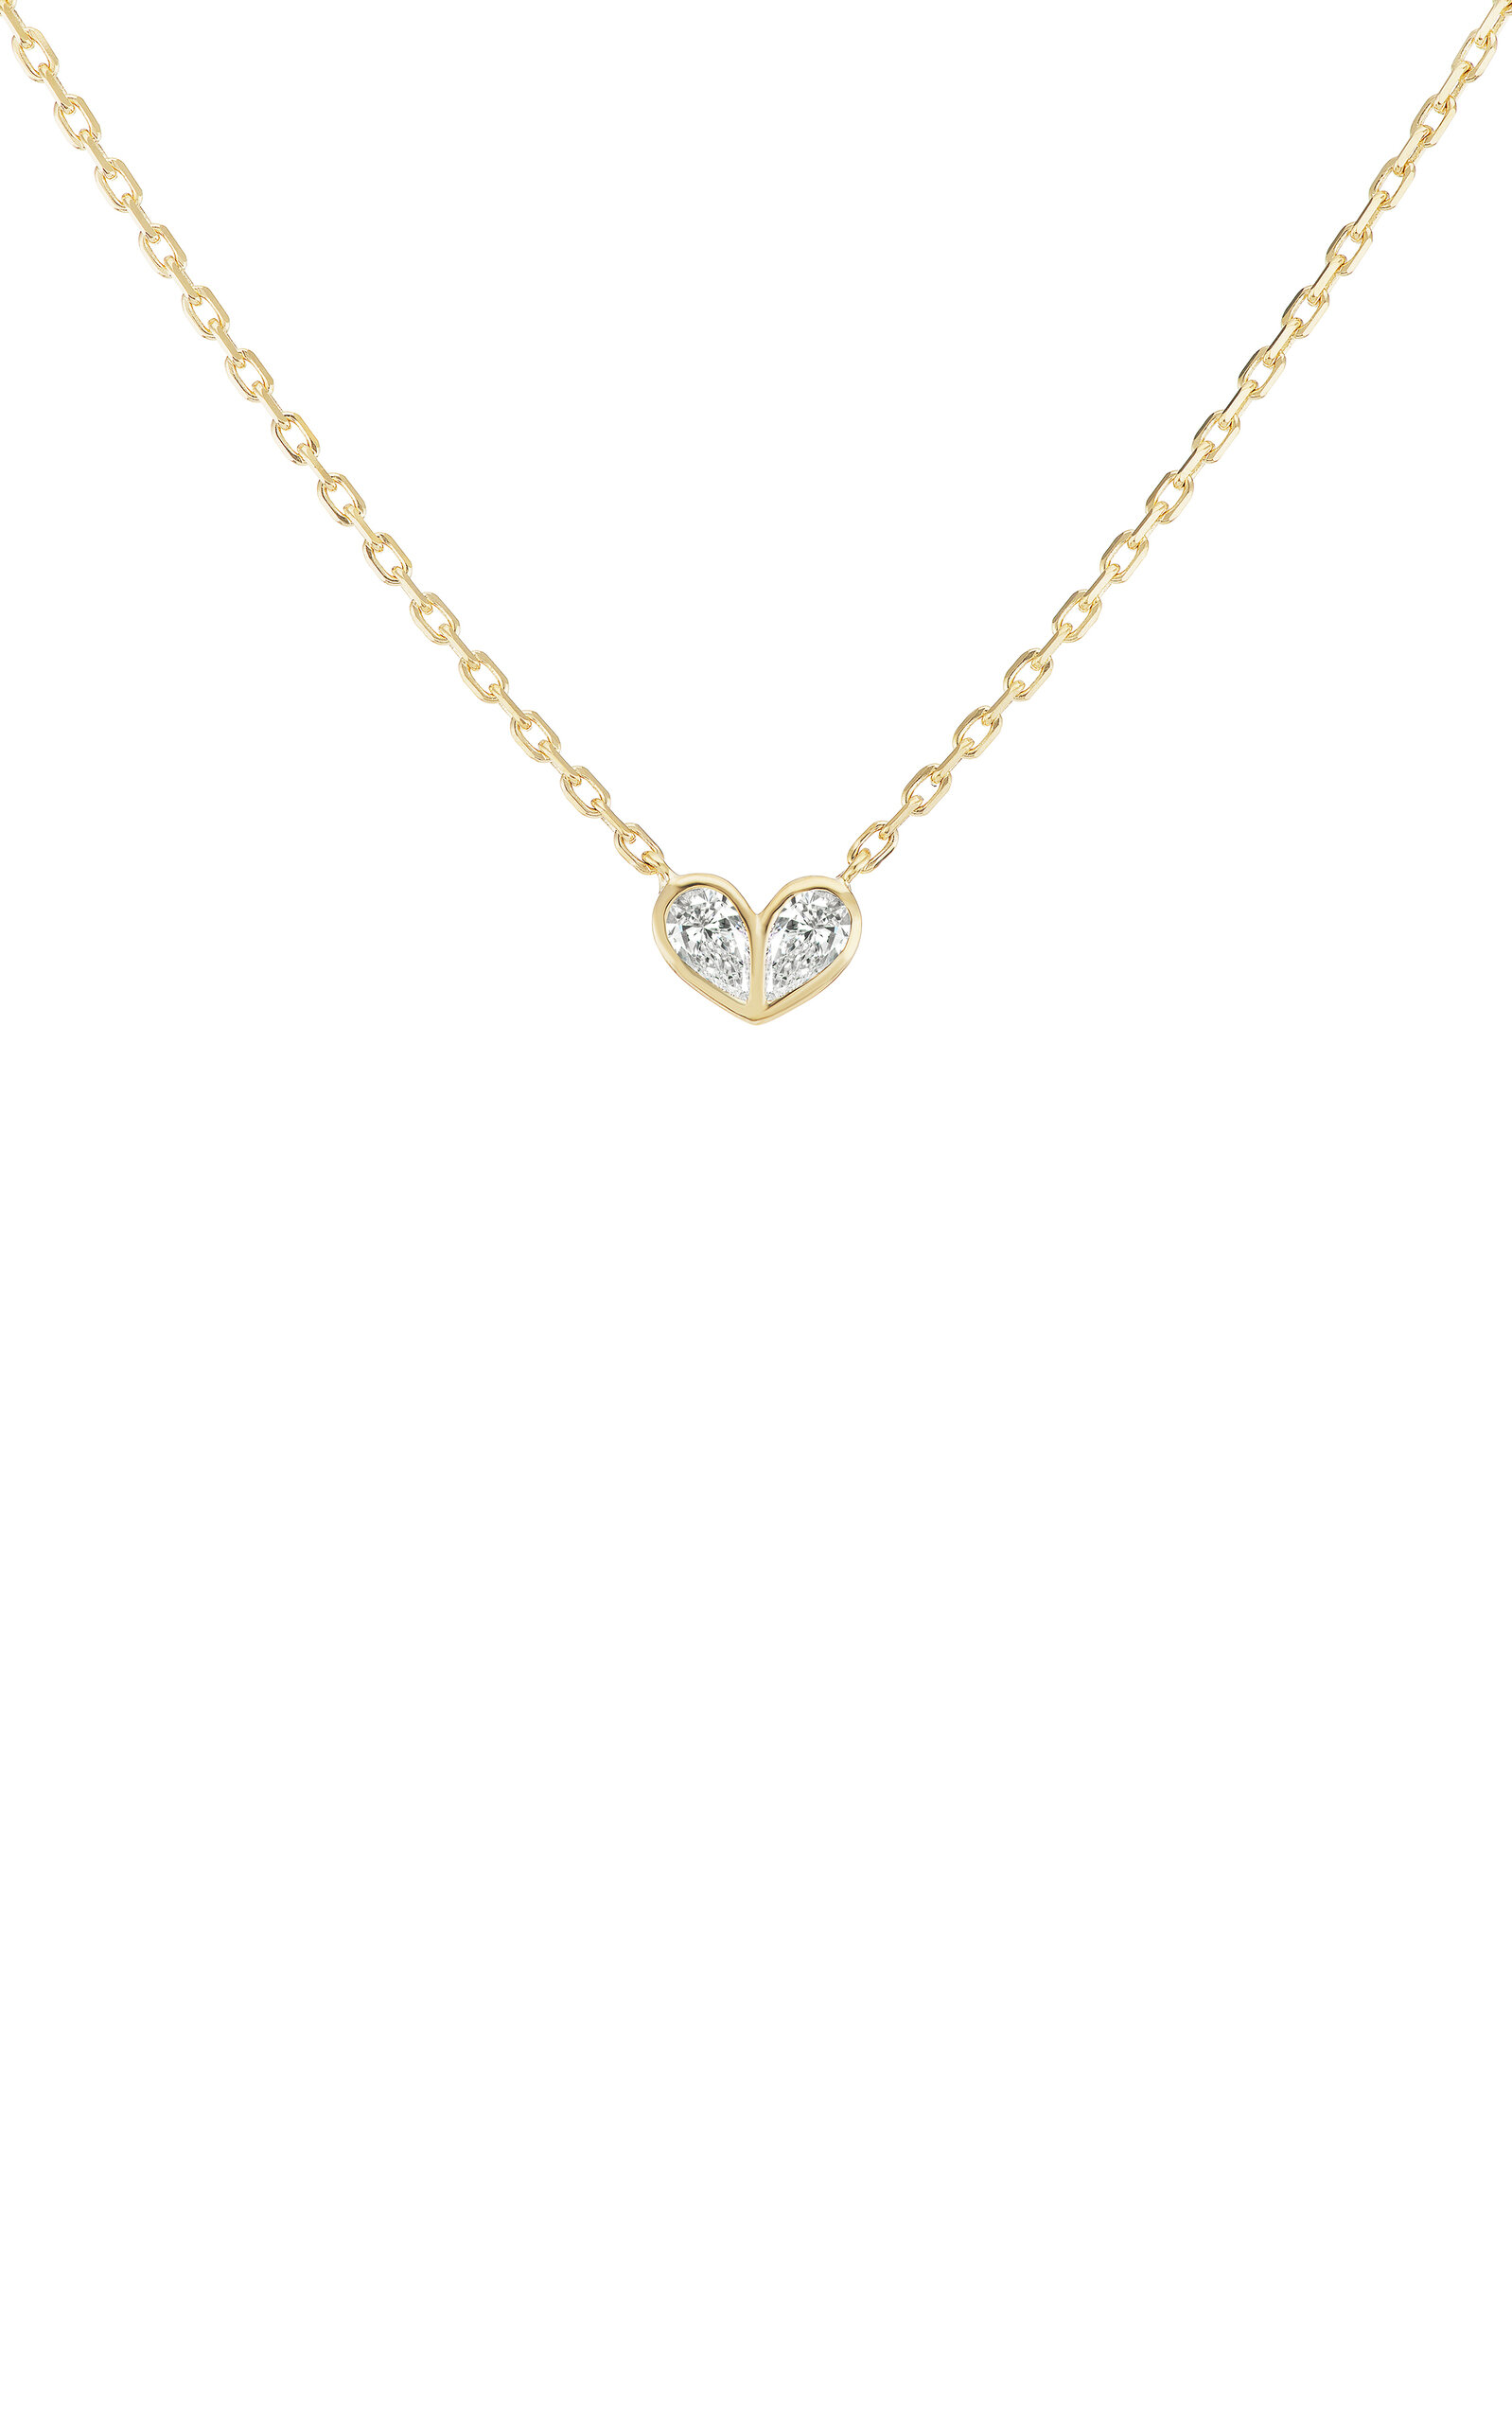 Sweetheart 18K Yellow Gold Diamond Necklace